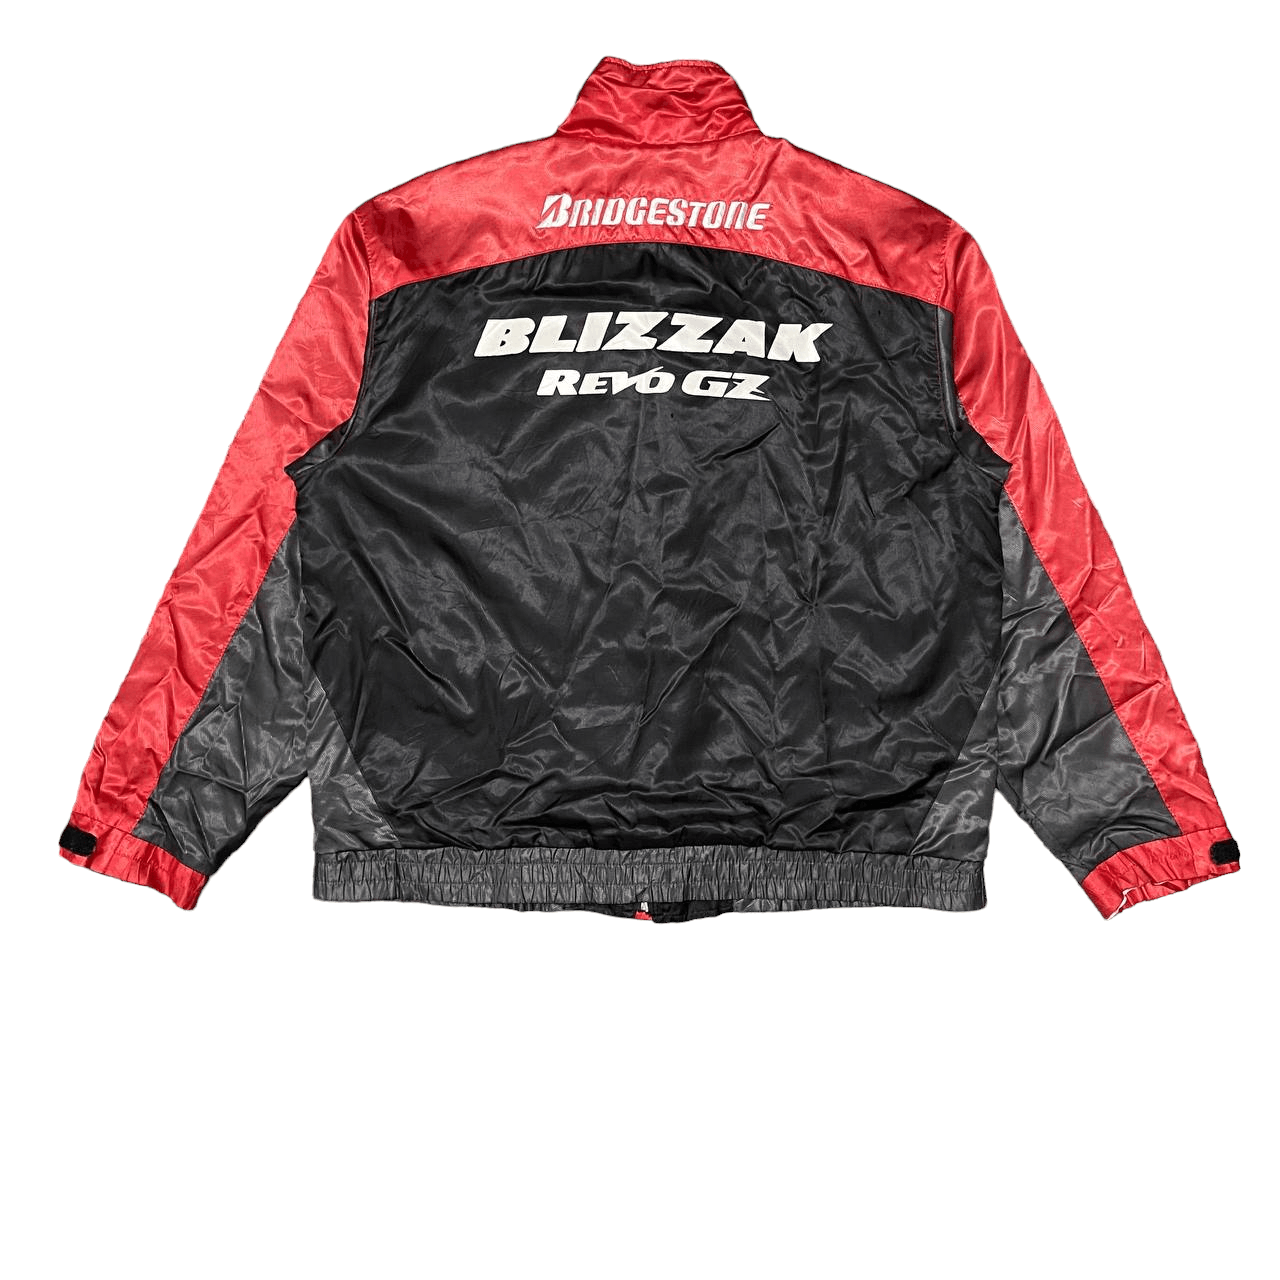 Vintage Bridgestone Blizzak Revo GZ Tyre Racing Jacket - 1